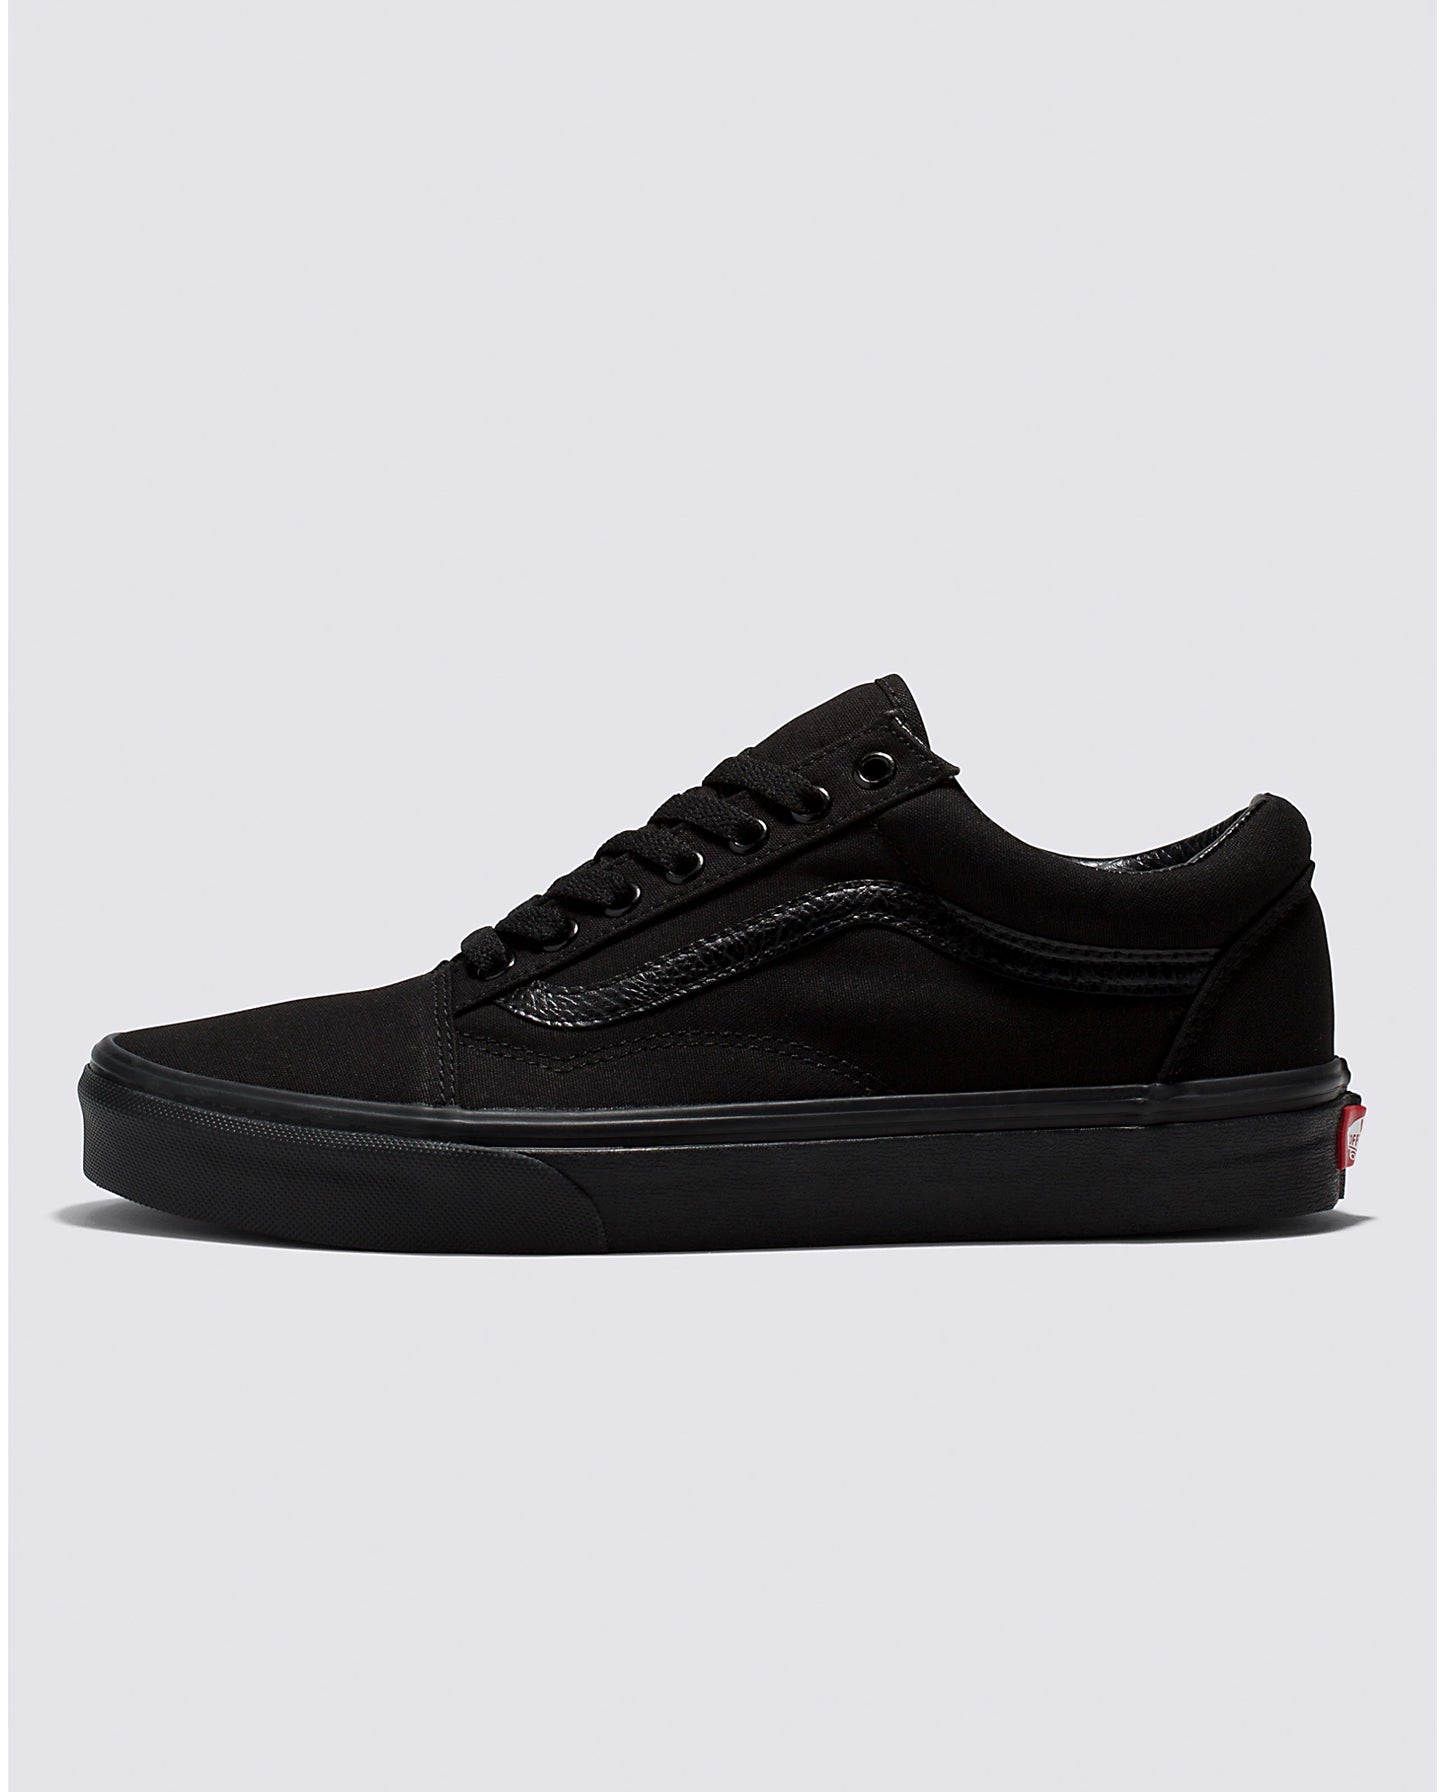 Side profile view of the Vans Men's all black Canvas Old Skool Sneaker